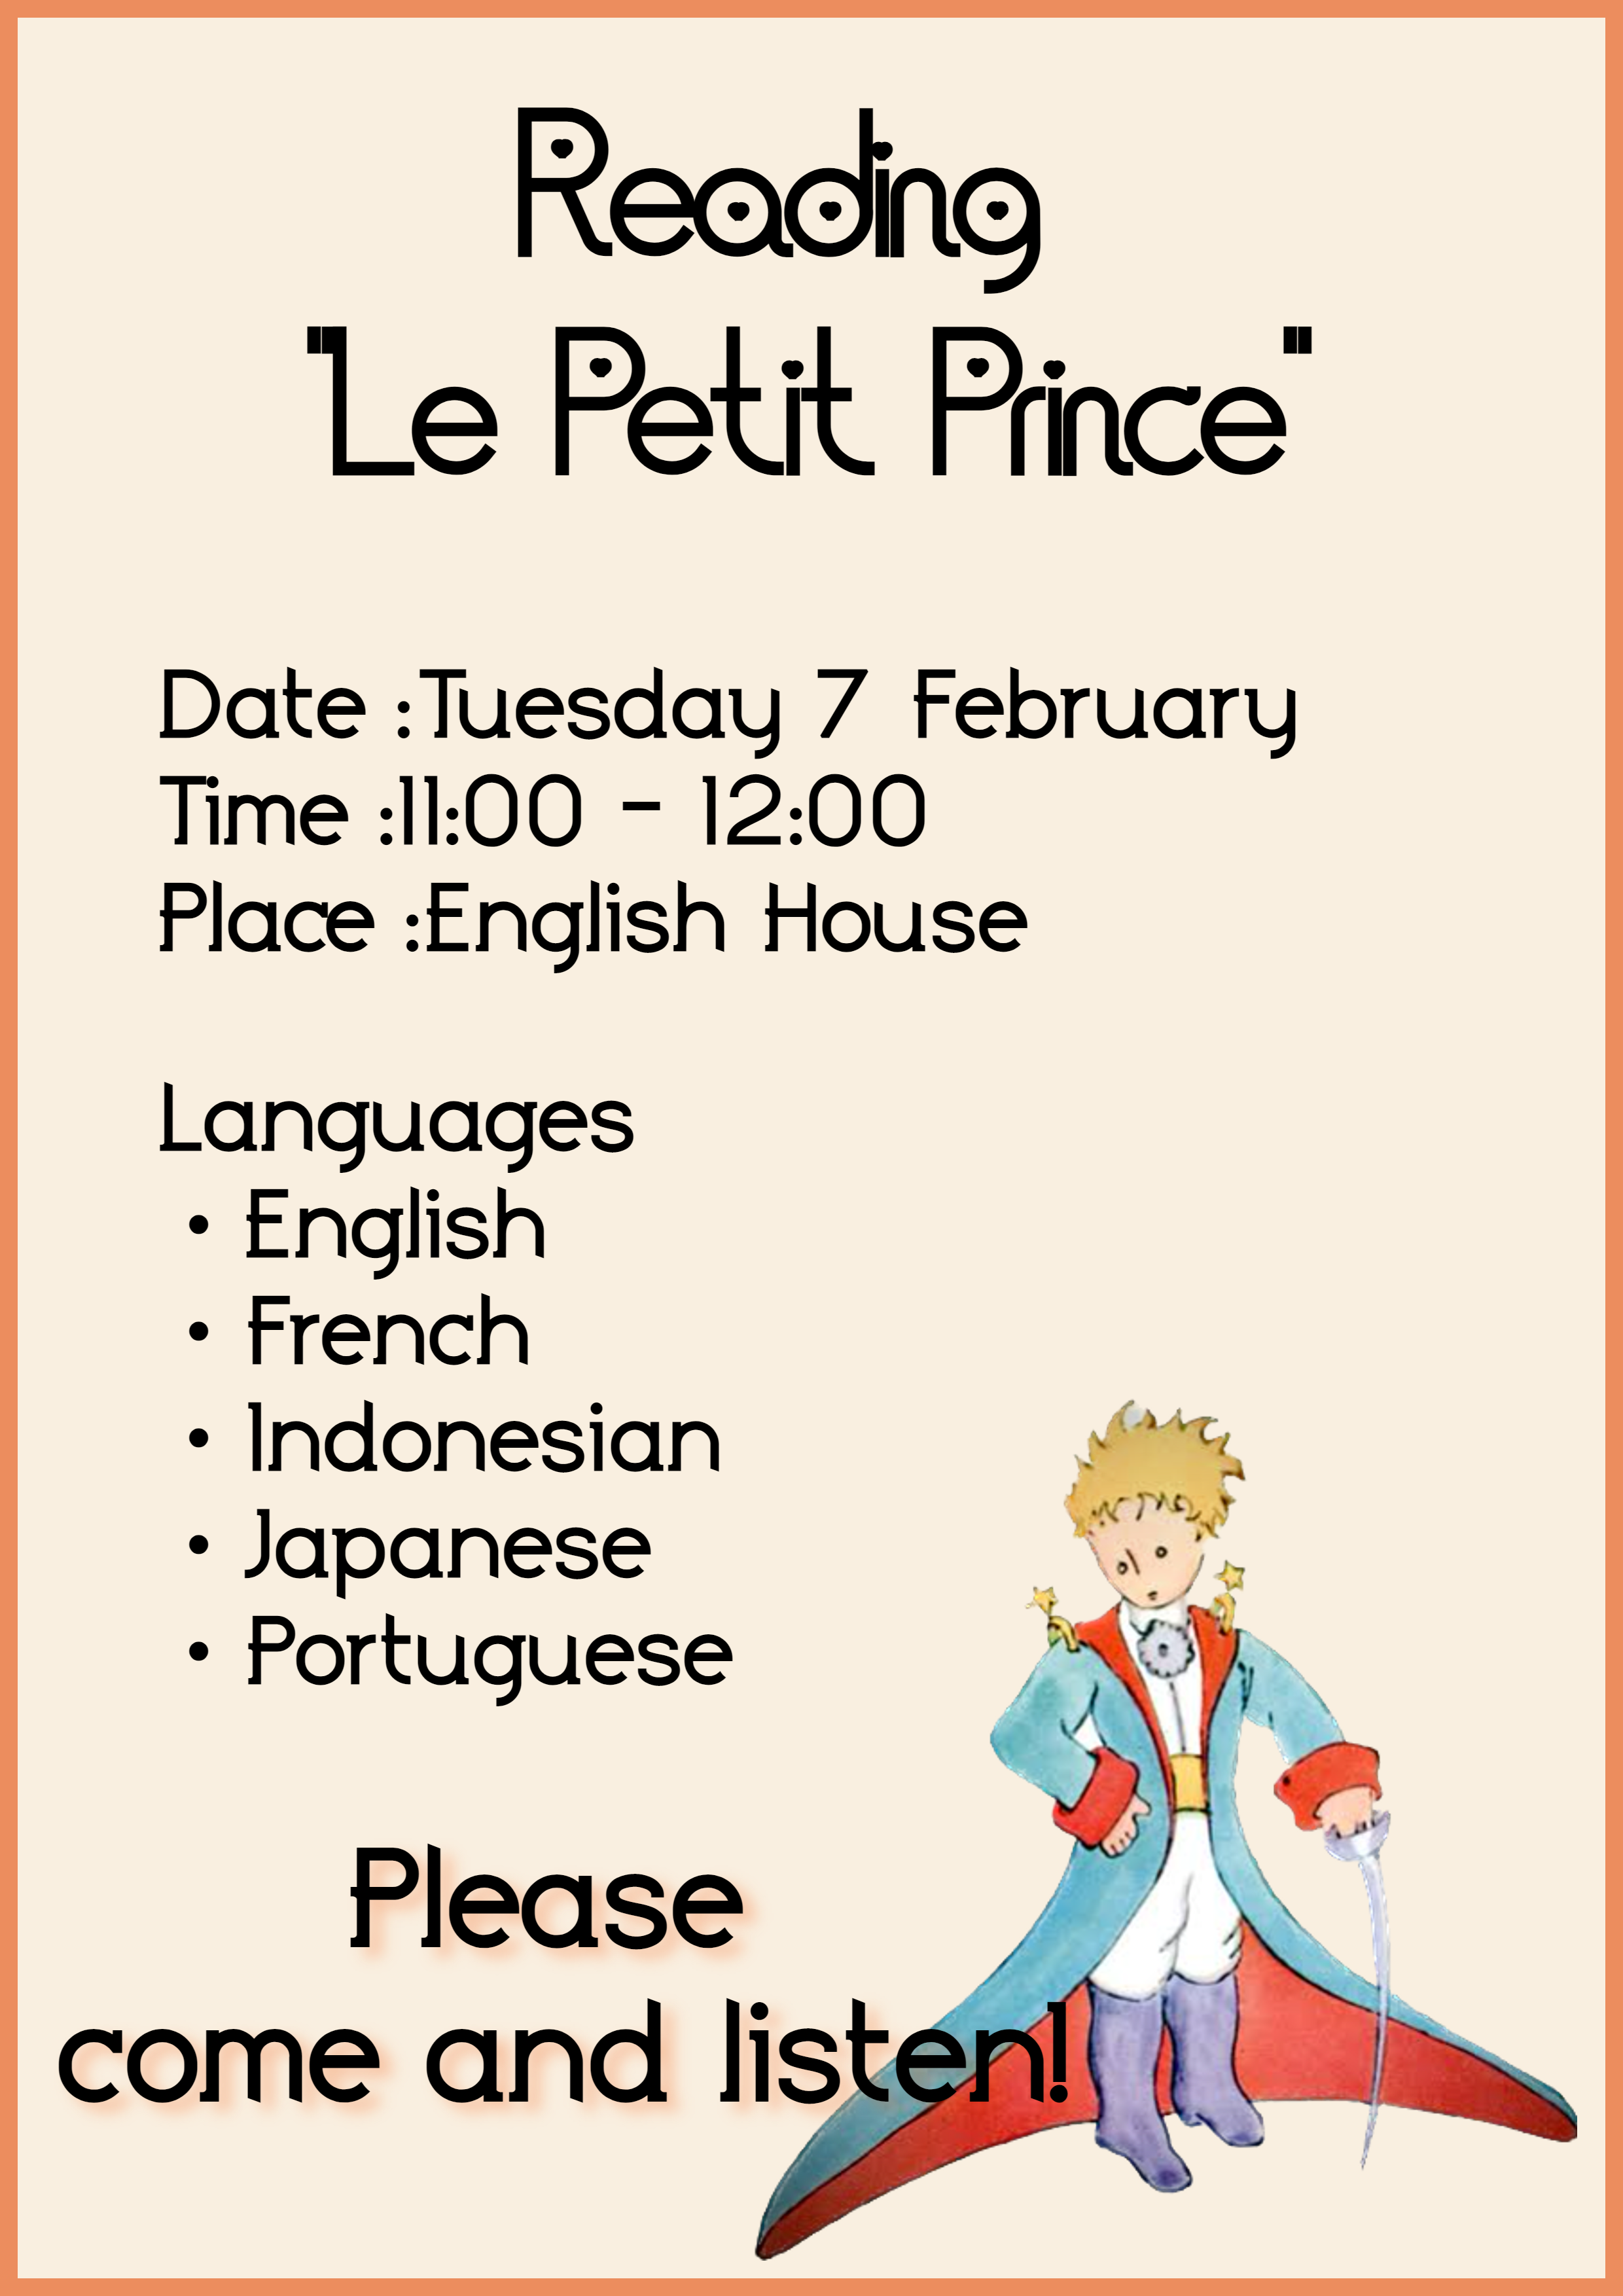 Le Petit Prince Poster.PNG